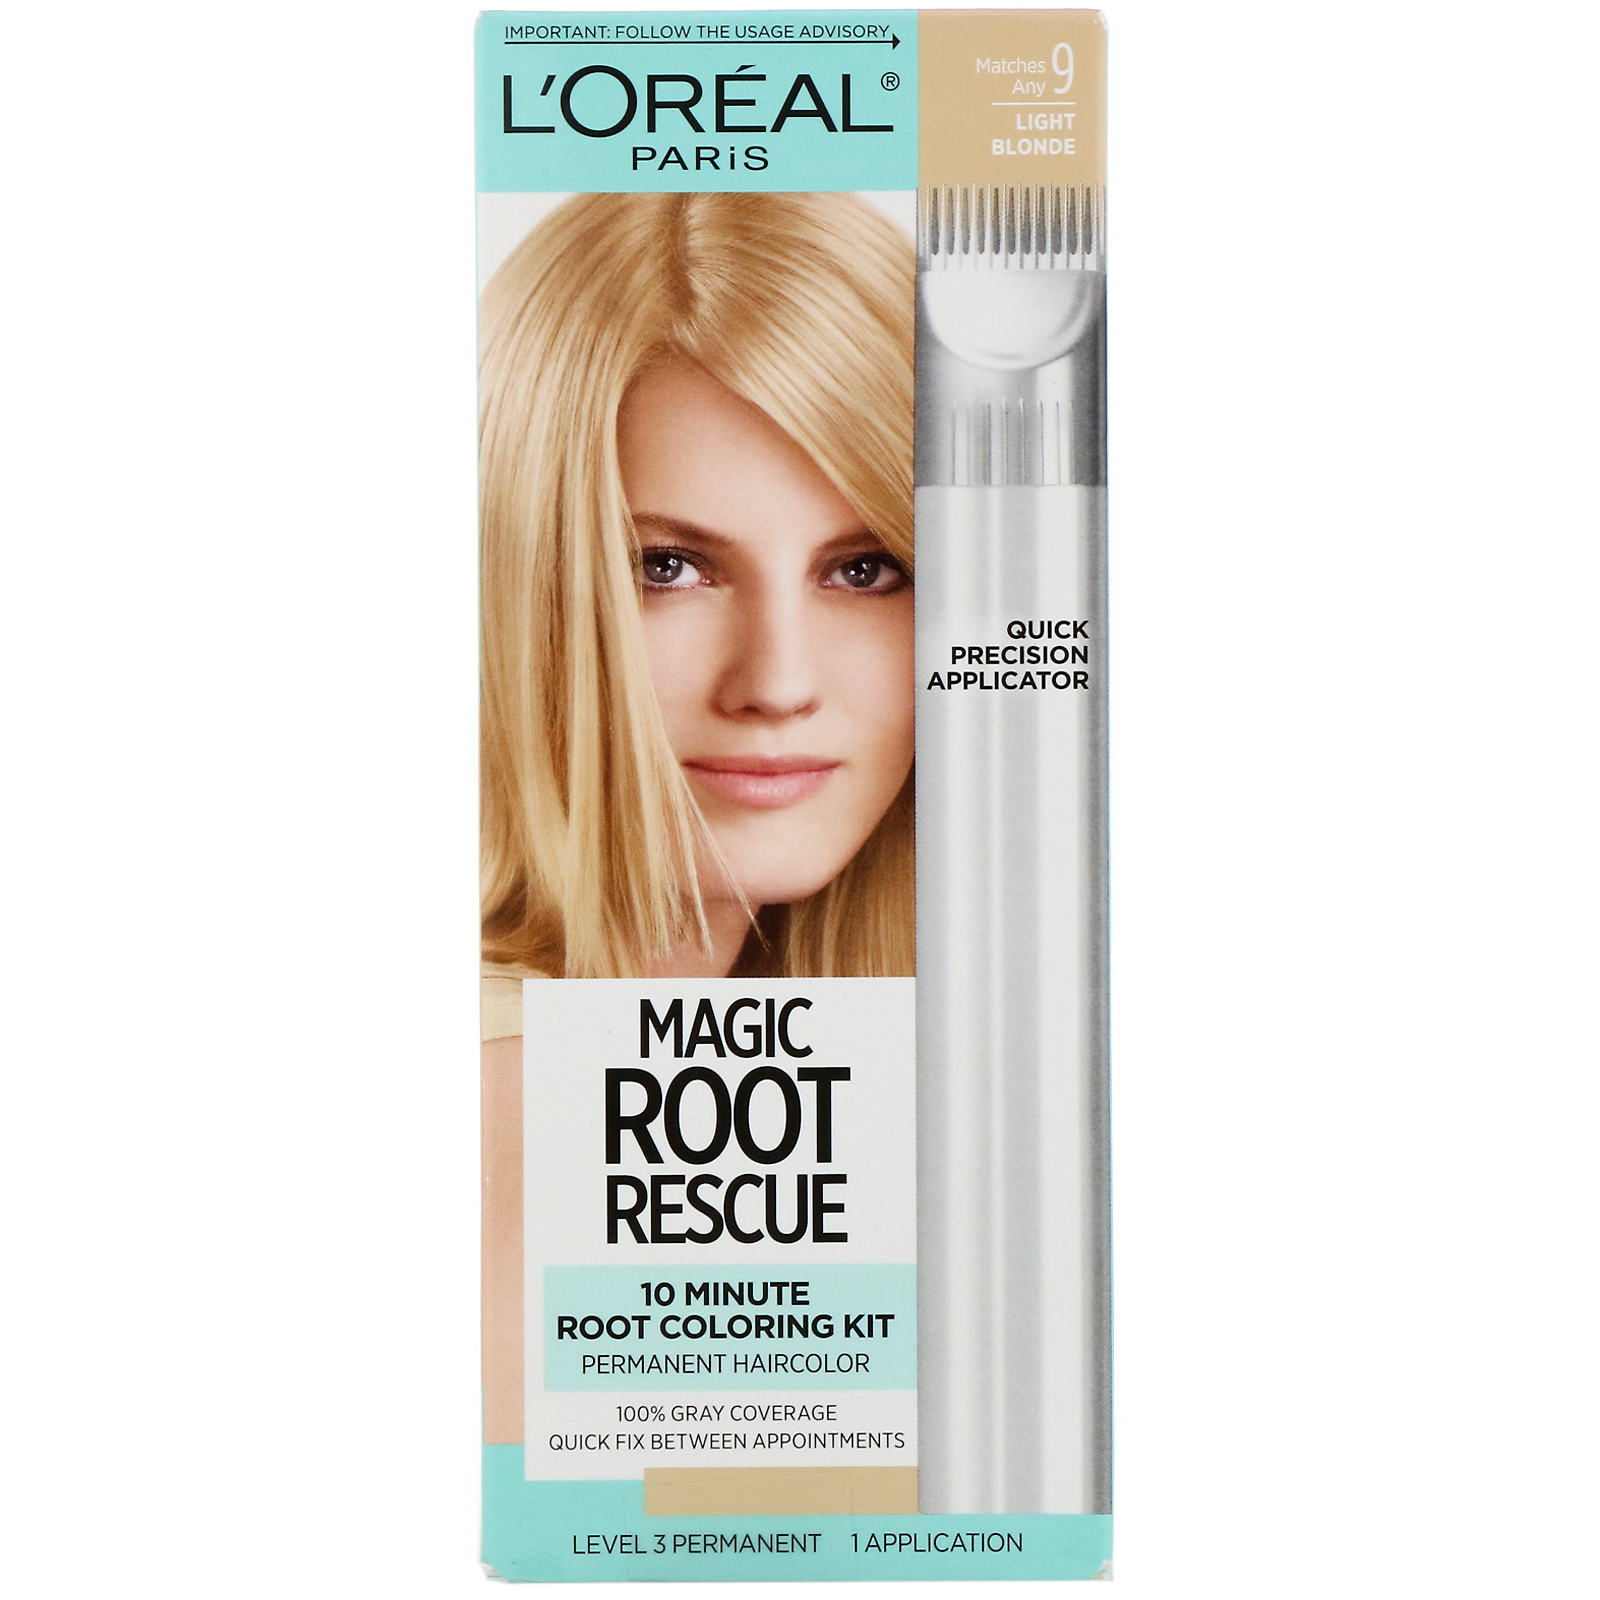 L'Oreal, Magic Root Rescue، مجموعة صباغة جذور الشعر خلال 10 دقائق، أشقر